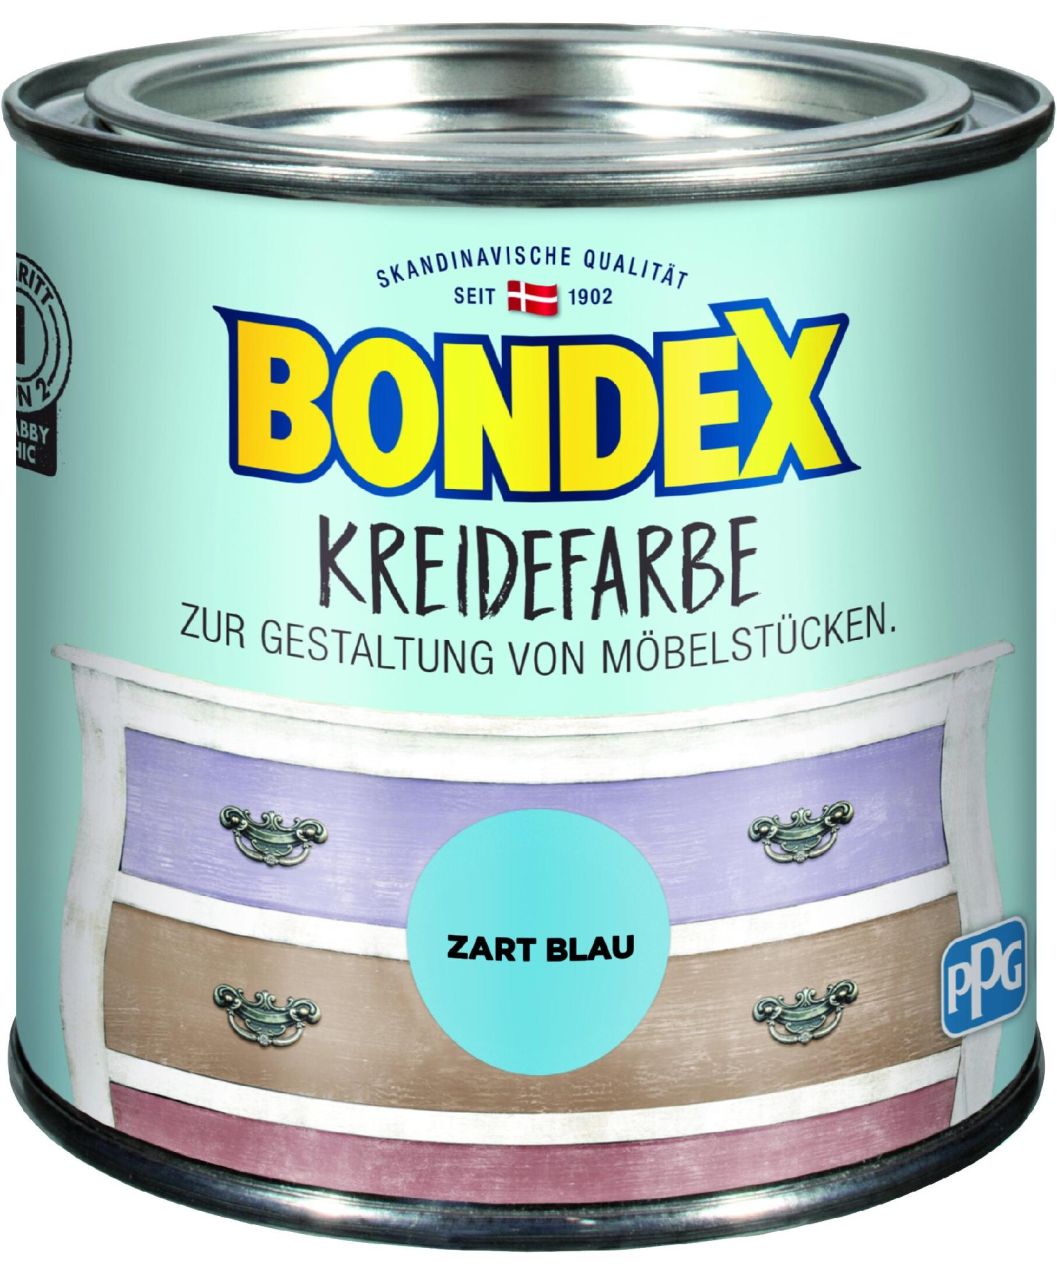 Bondex Kreidefarbe 500 ml zart blau von Bondex